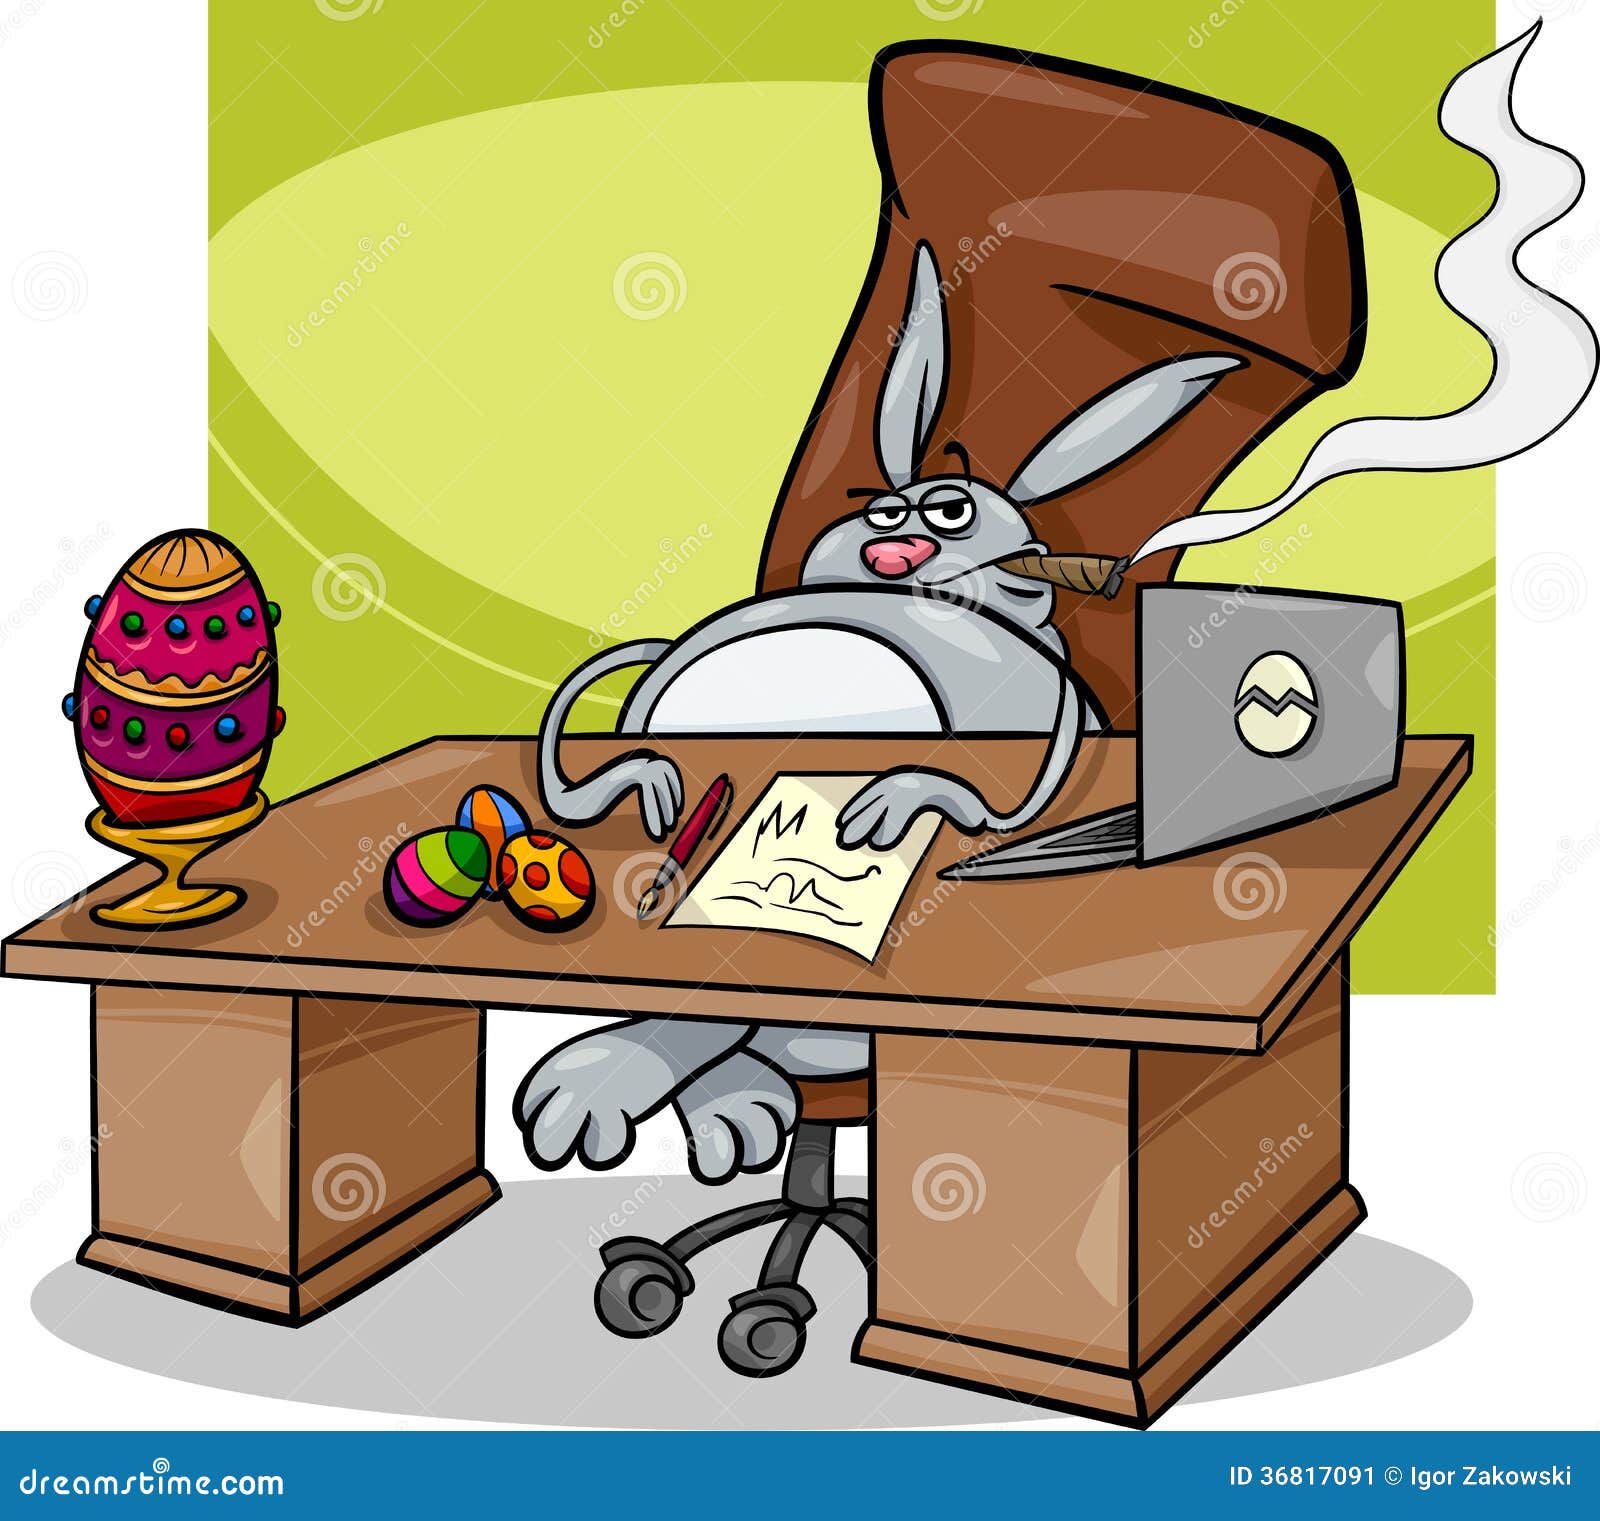 Easter Bunny Businessman Cartoon Stock Vector - Illustration of drawing,  humor: 36817091